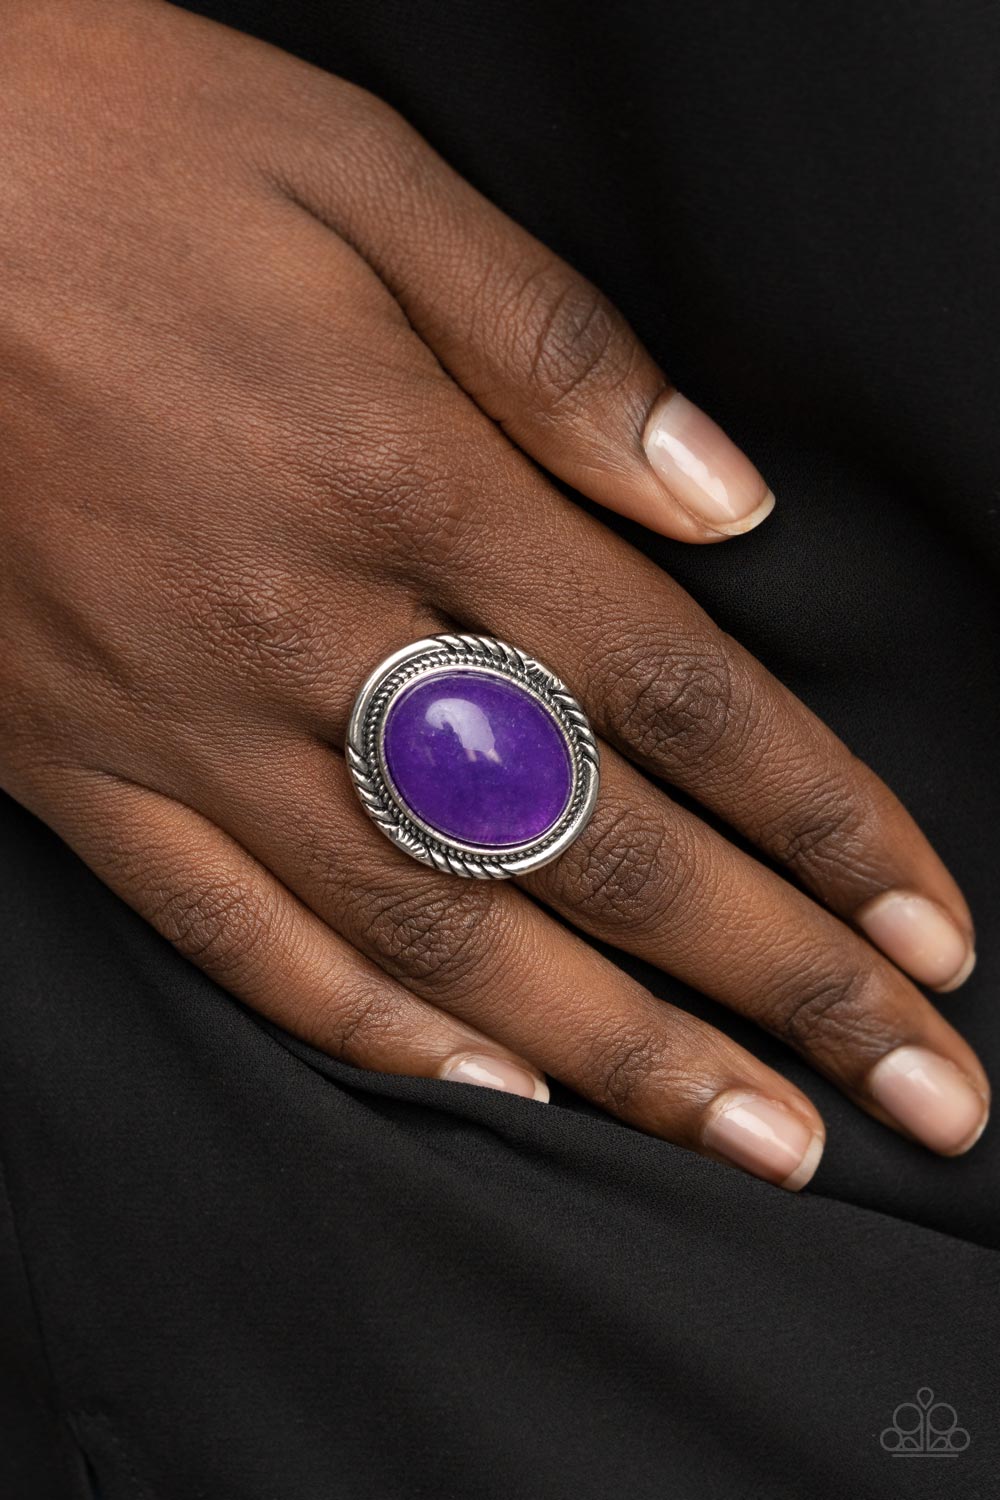 Stone Terrarium Purple Stone Ring - Paparazzi Accessories- lightbox - CarasShop.com - $5 Jewelry by Cara Jewels